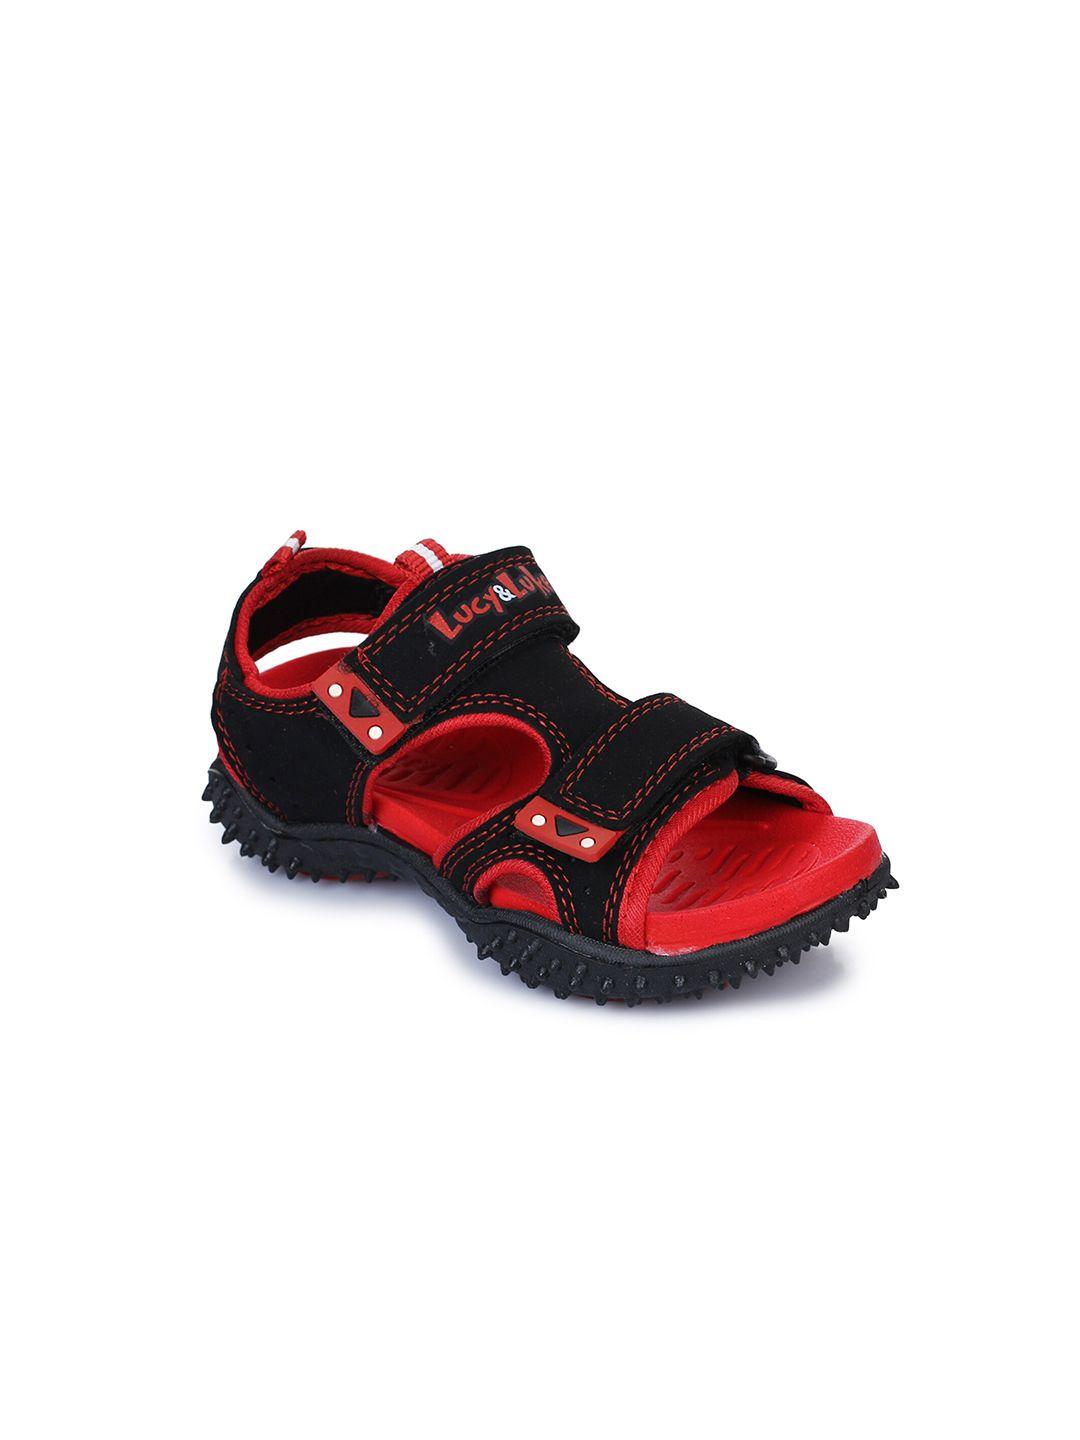 liberty unisex kids black & red comfort sandals